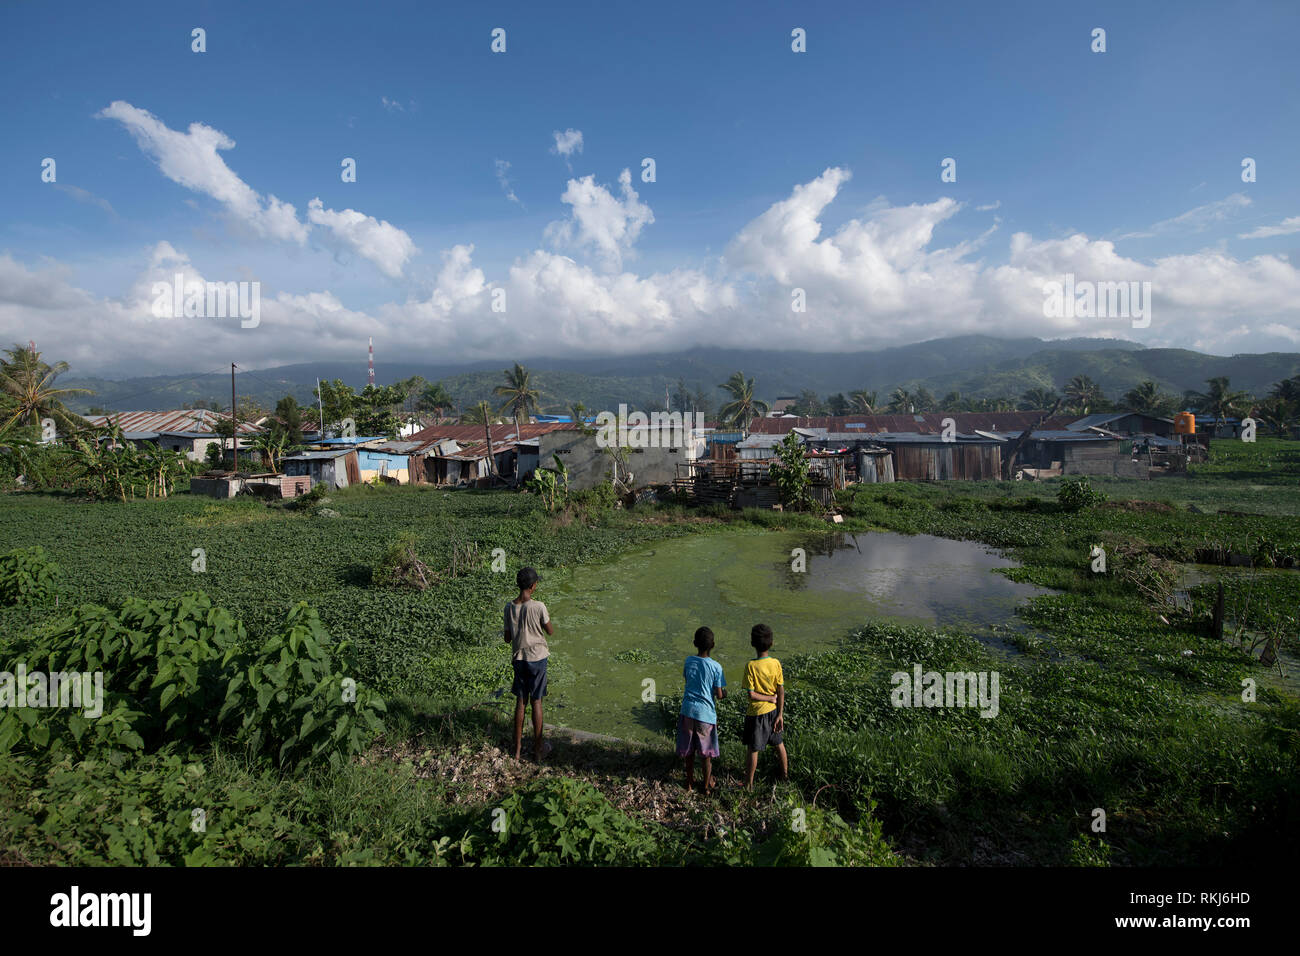 Township, Kids at pond near shacks, Dili, East Timor Stock Photo